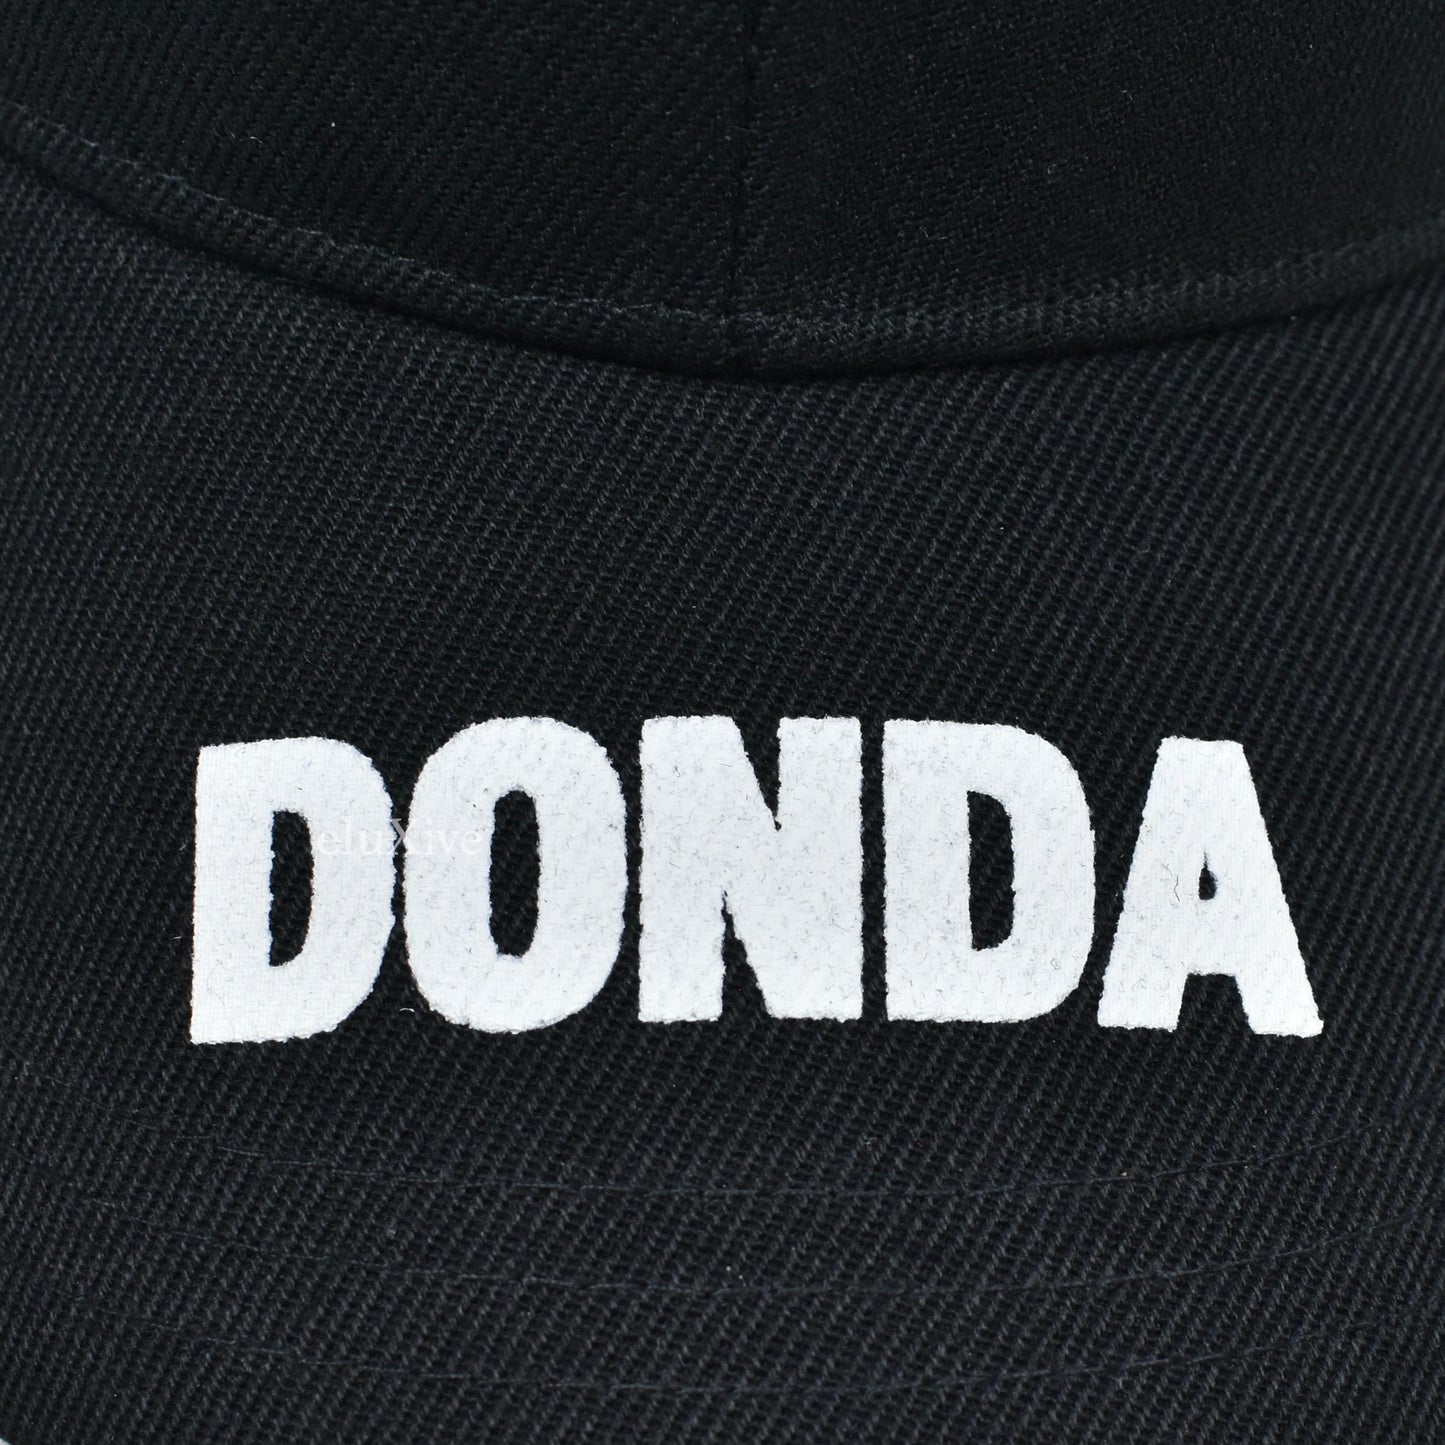 Kanye West x Balenciaga - Black DONDA Print Hat